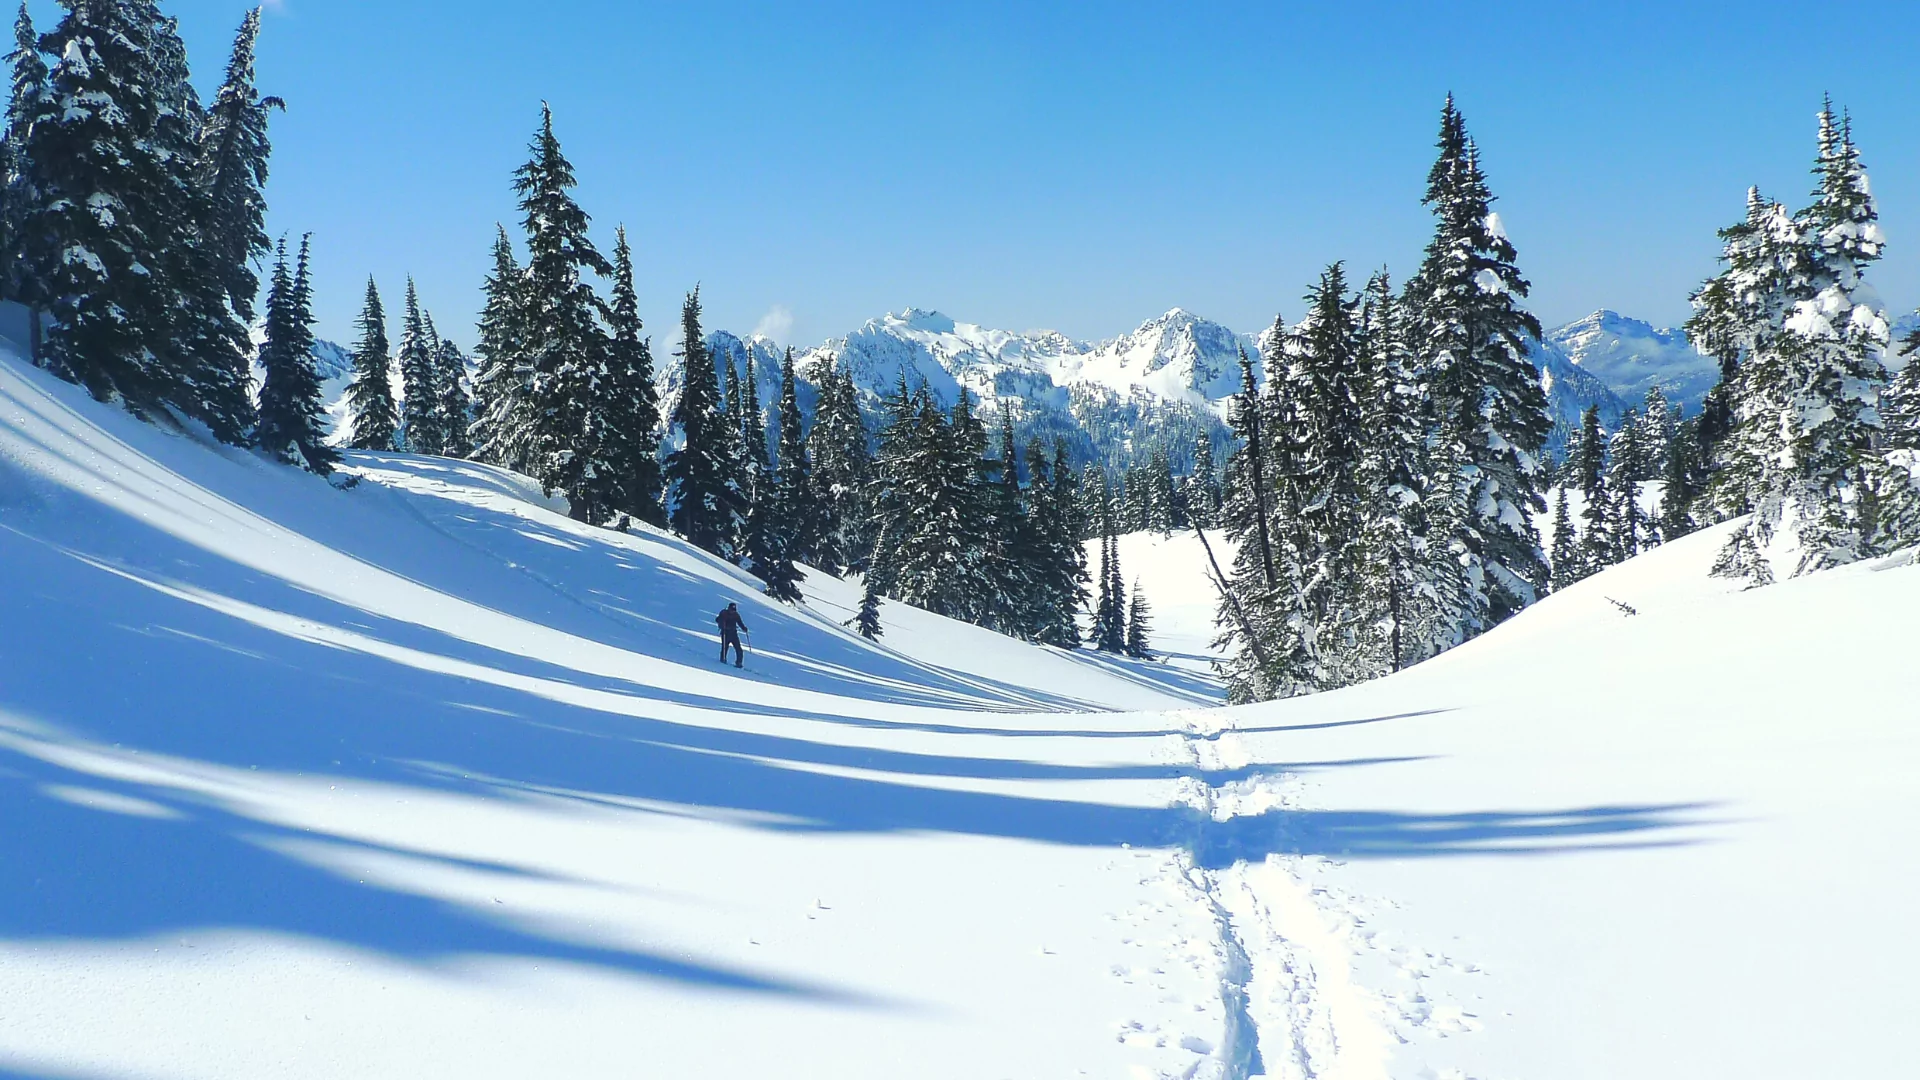 Mt Rainier snowshoe hiking trails in Washington winter